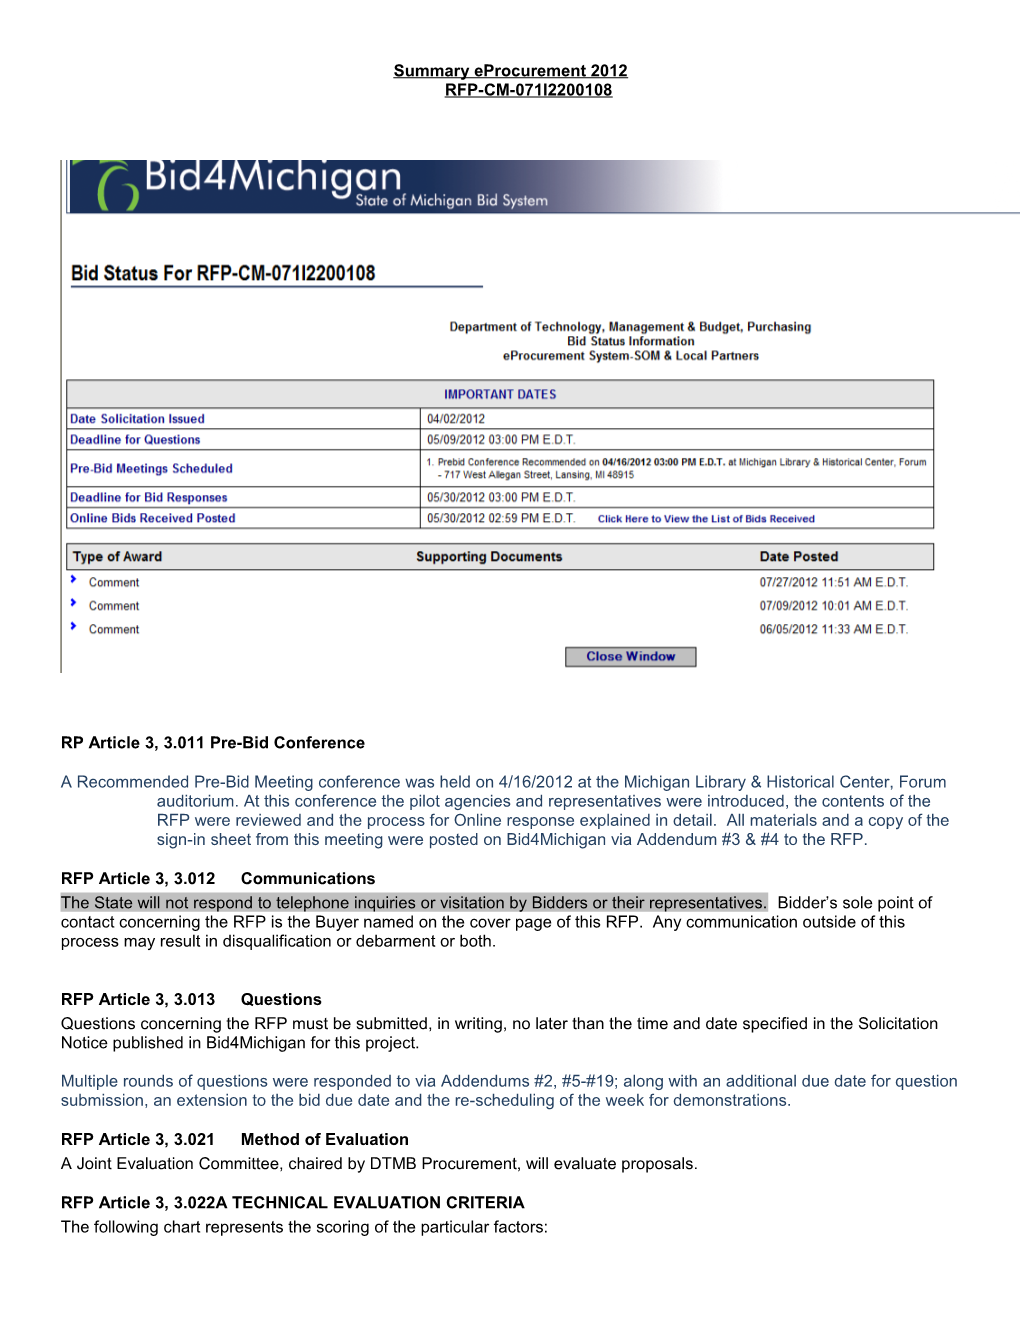 Summary Eprocurement 2012RFP-CM-071I2200108